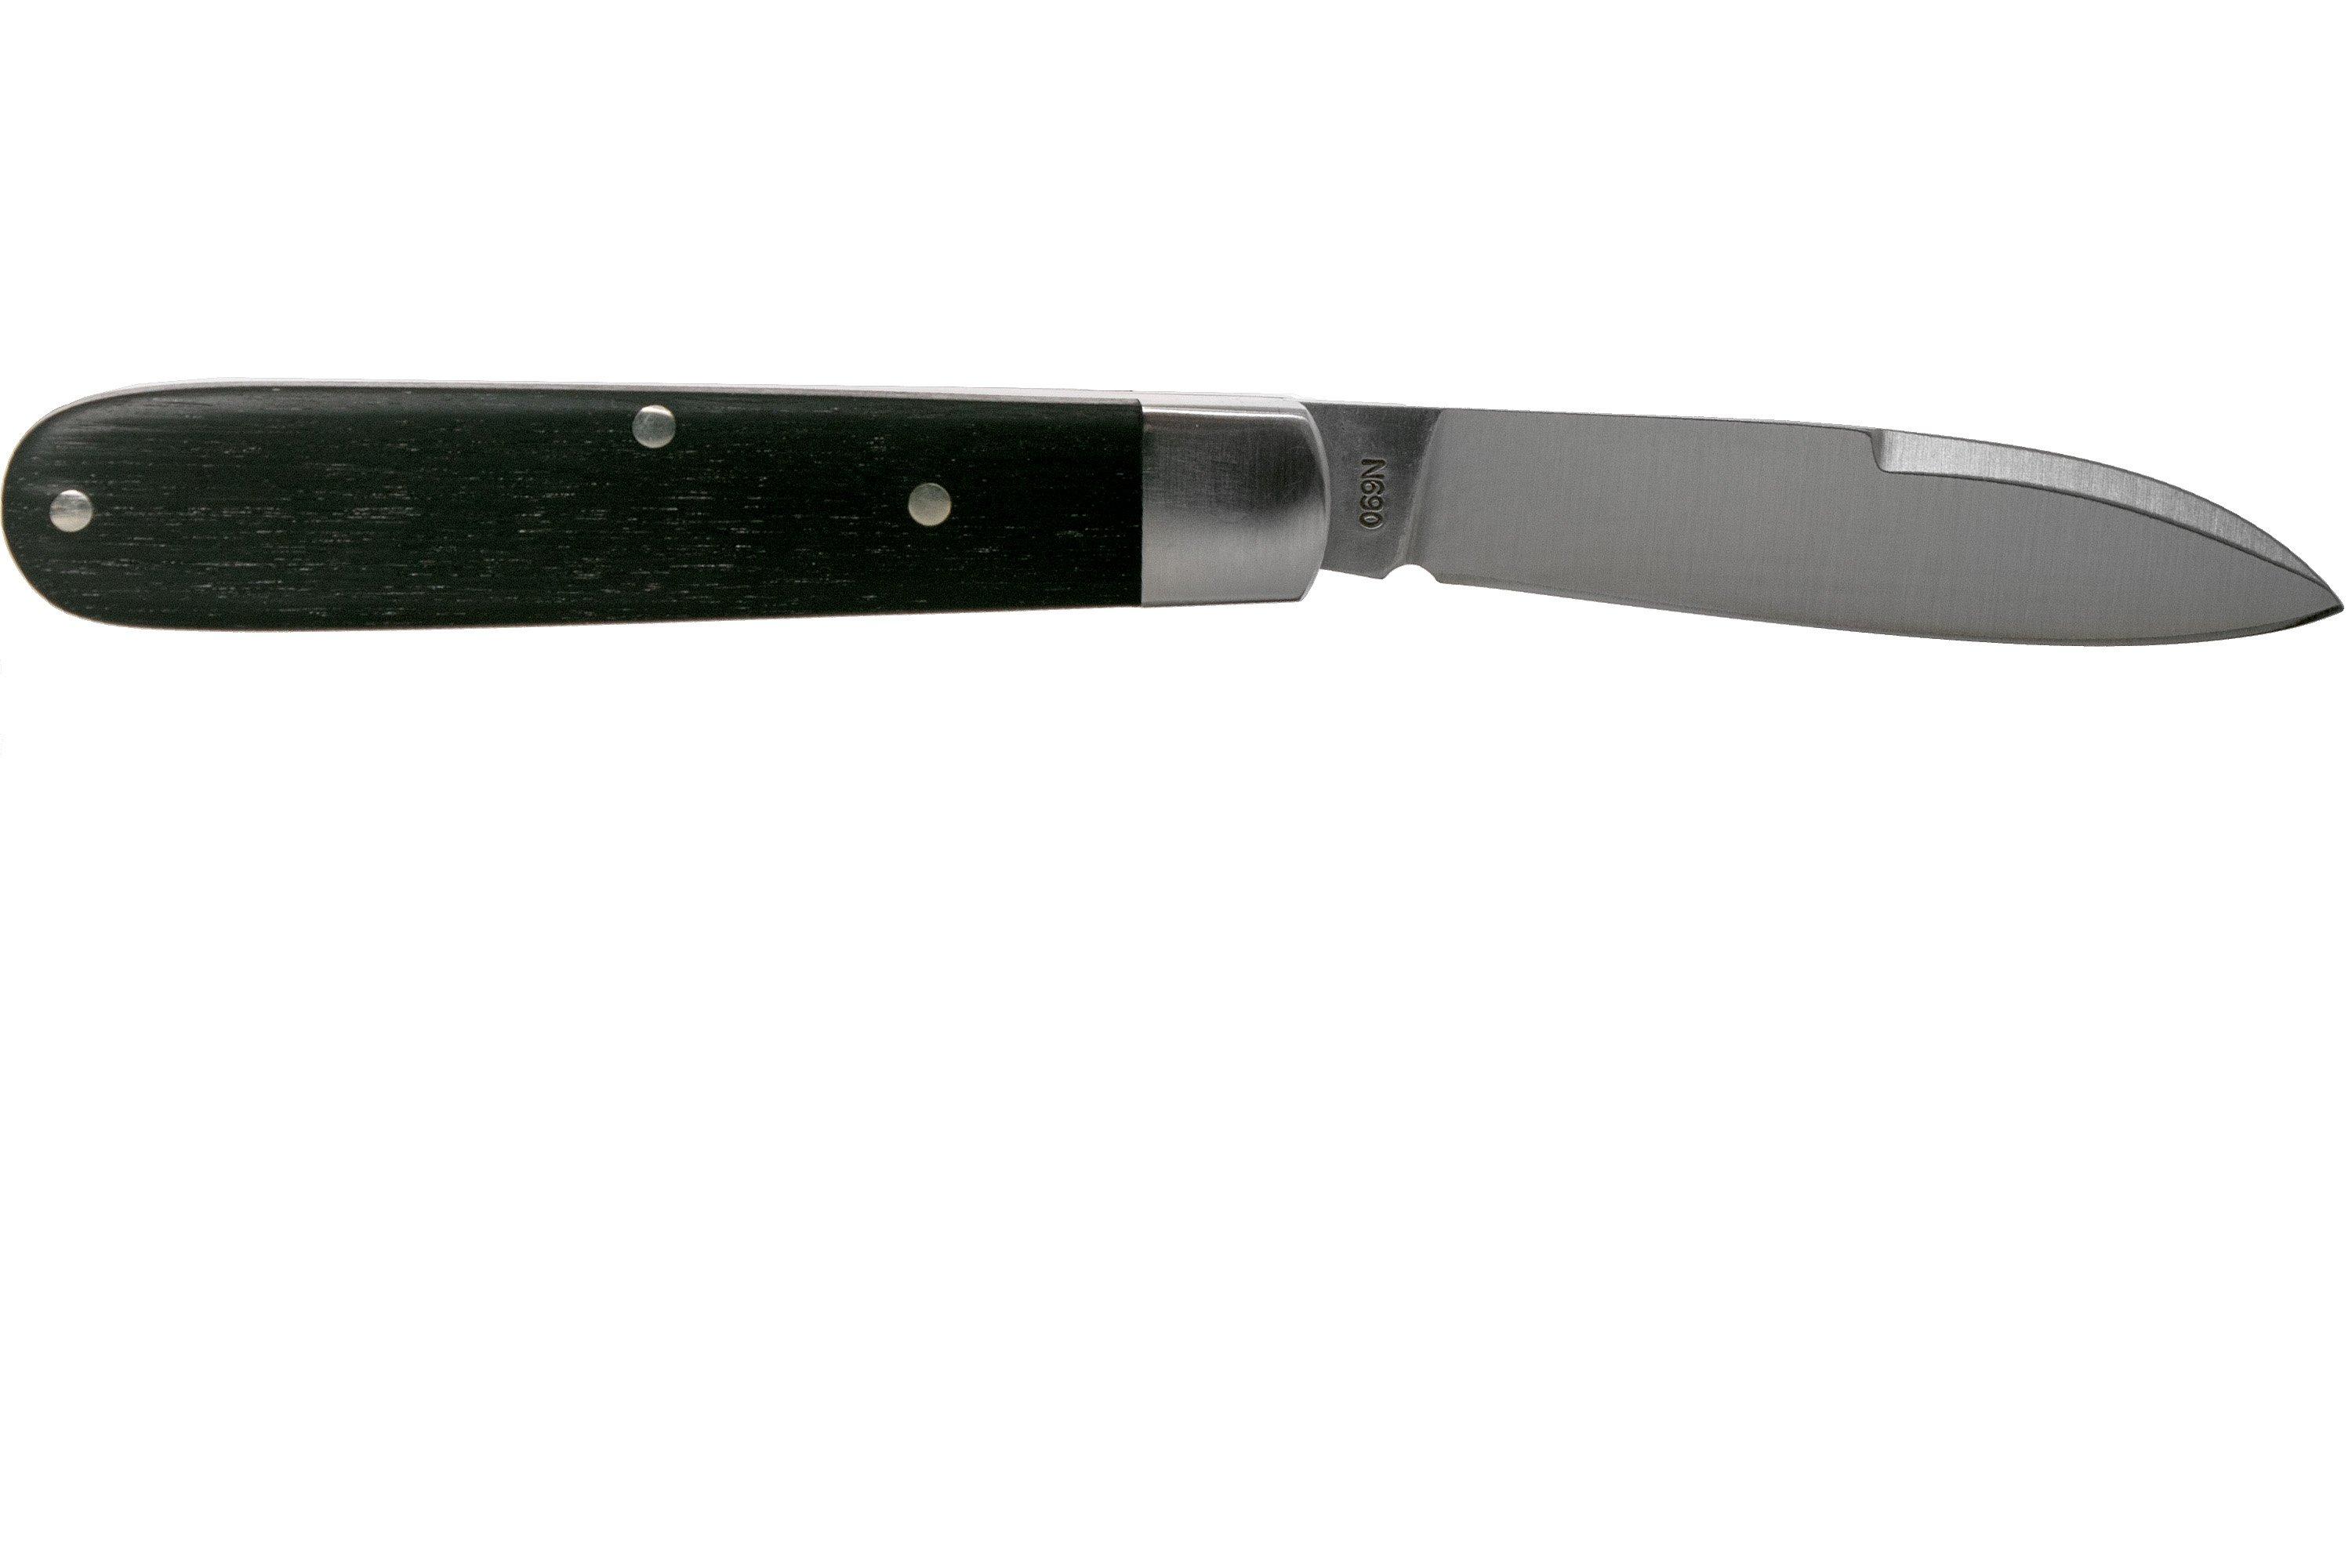 Böker Barlow Prime Hornbeam 110942 pocket knife | Advantageously ...